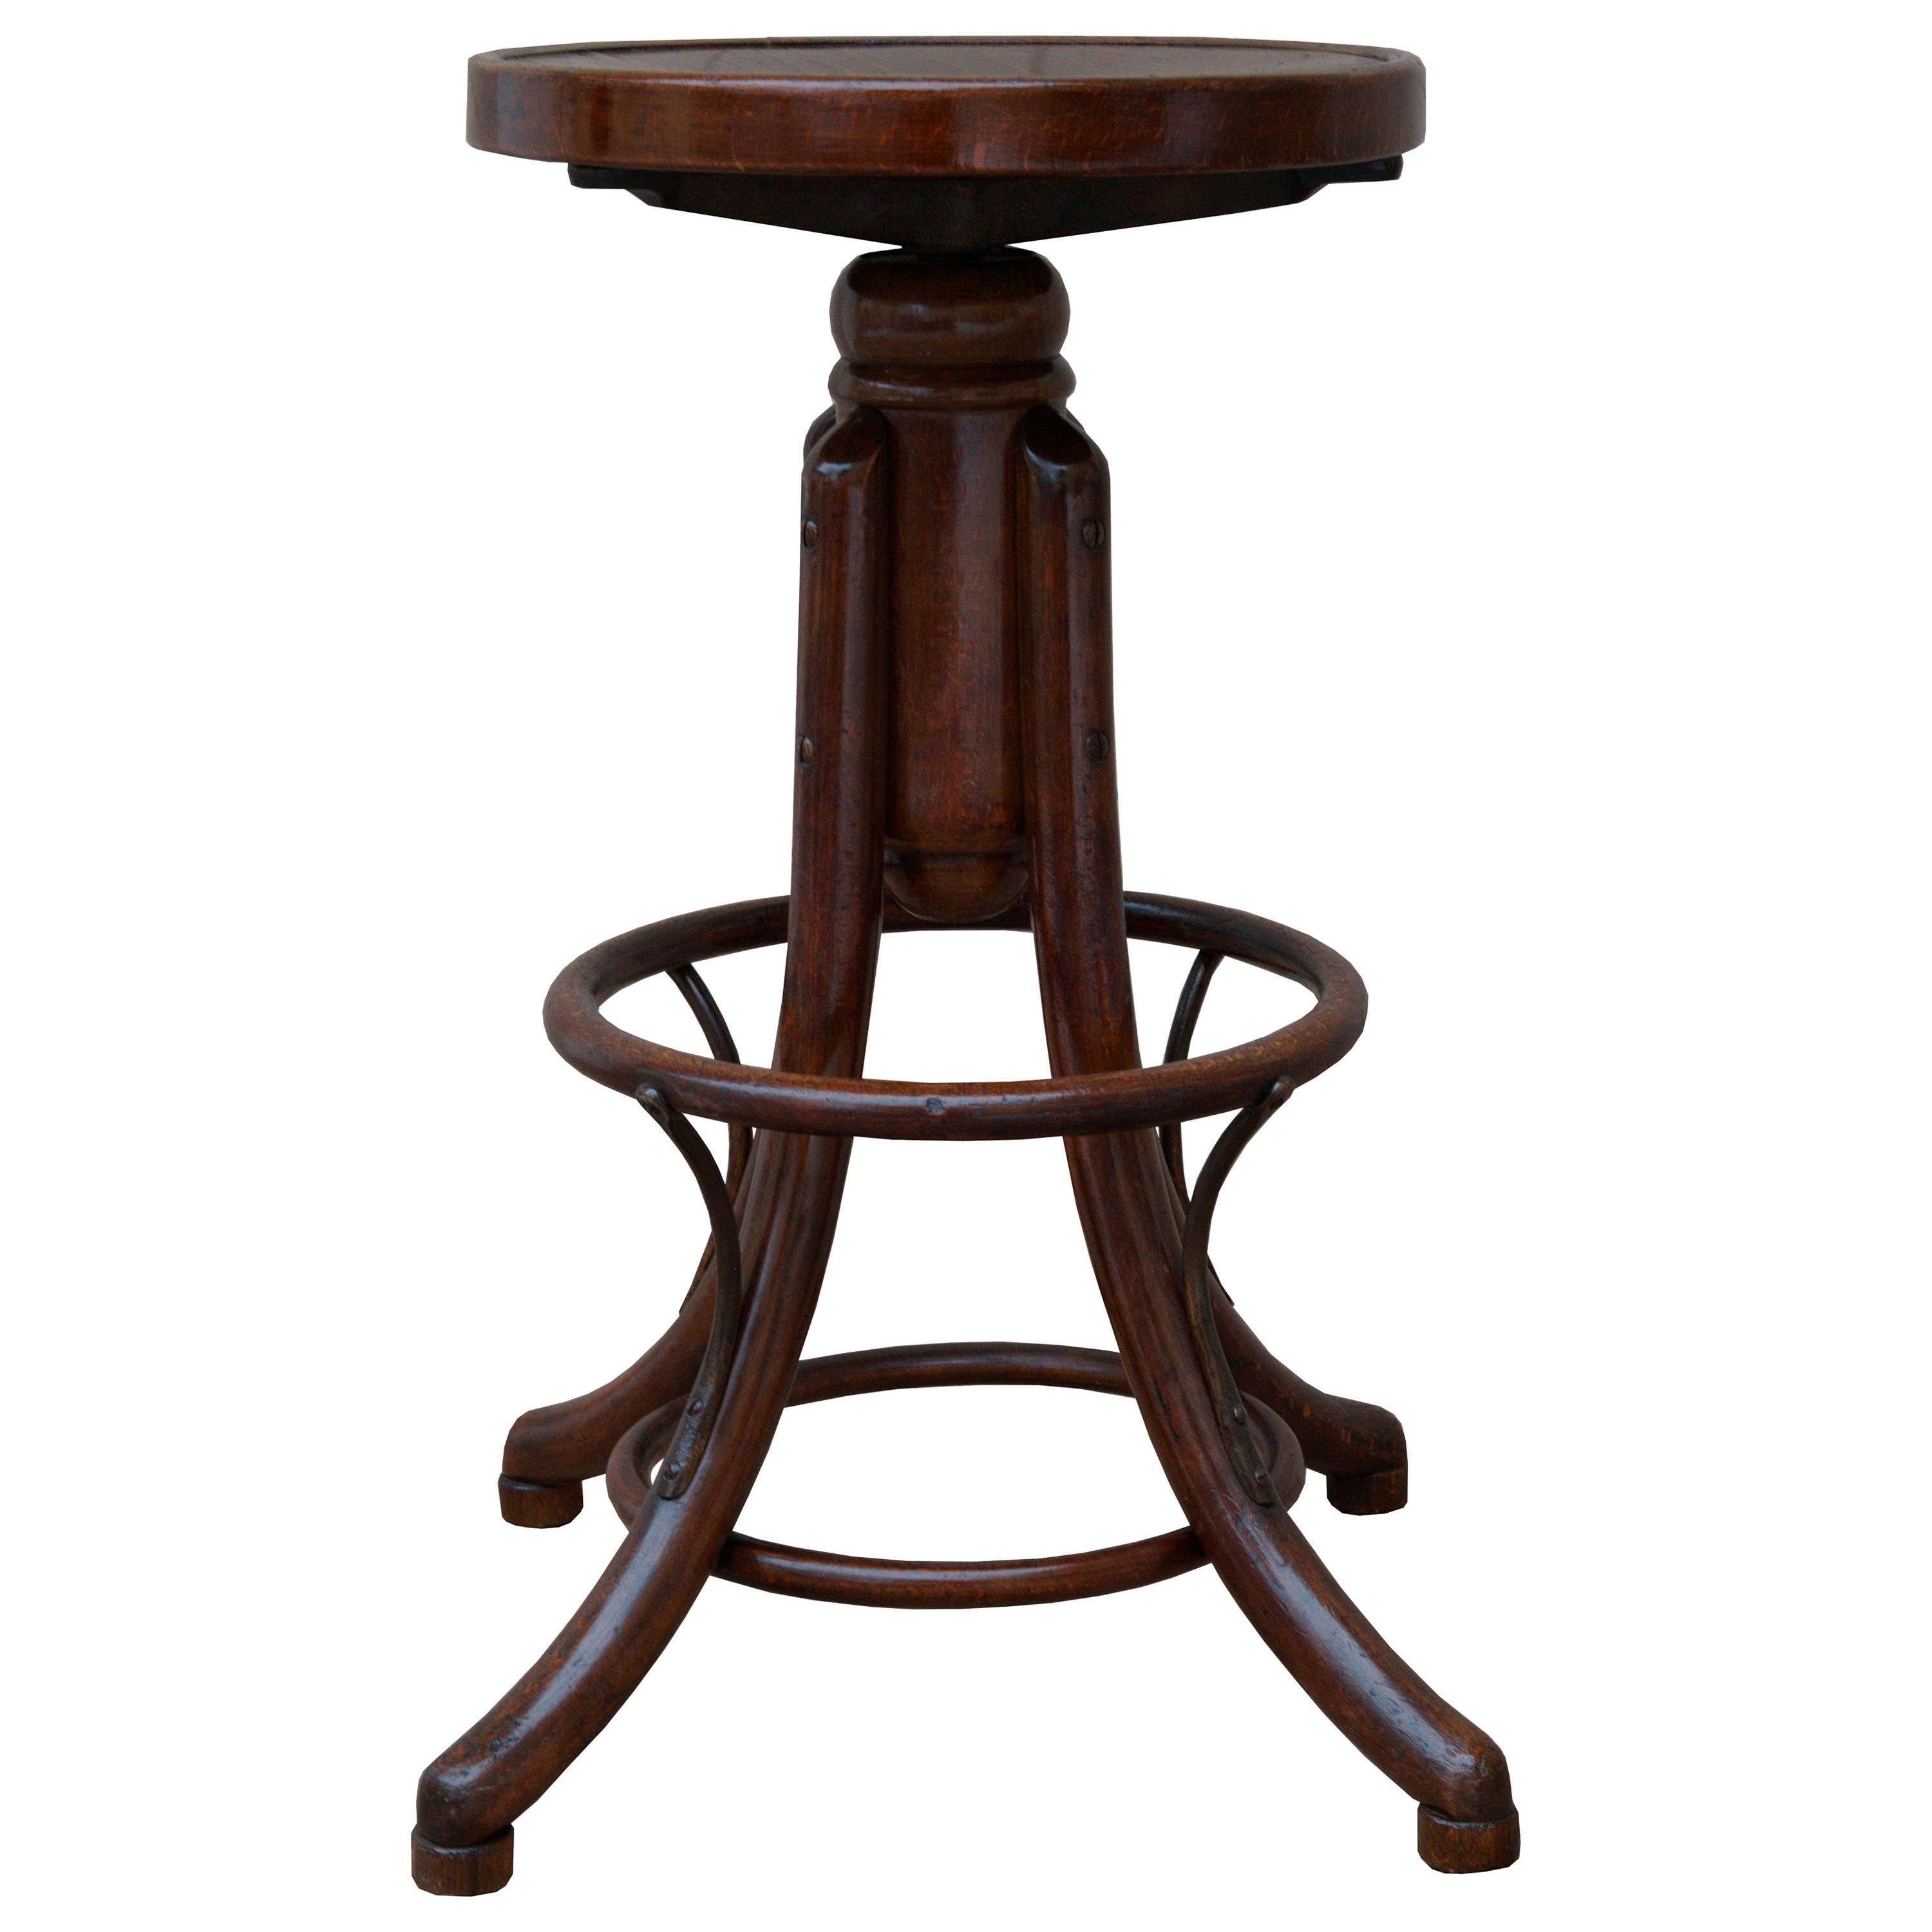 1915 Art Nouveau Adjustable Beech Bar Chair by Gebruder Thonet For Sale